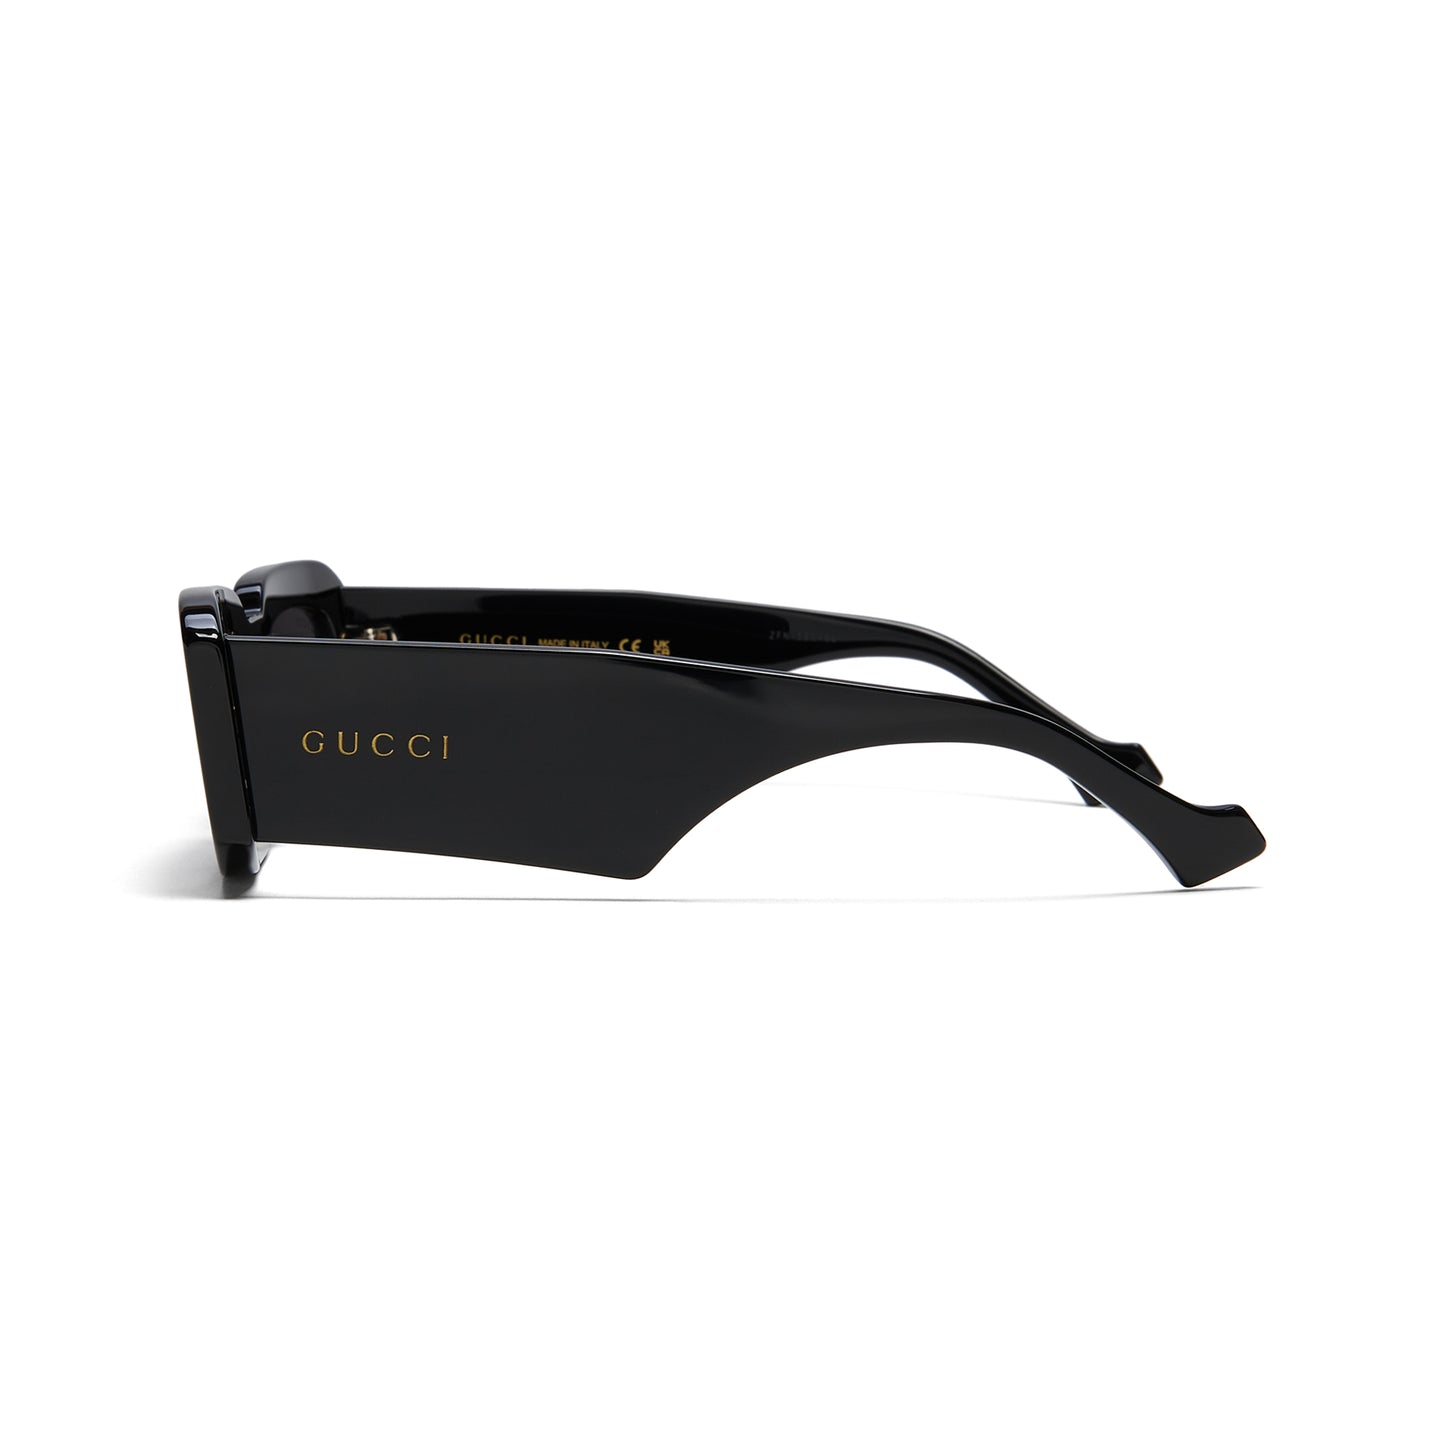 Gucci Rectangular Acetate Sunglasses (Black/Grey)